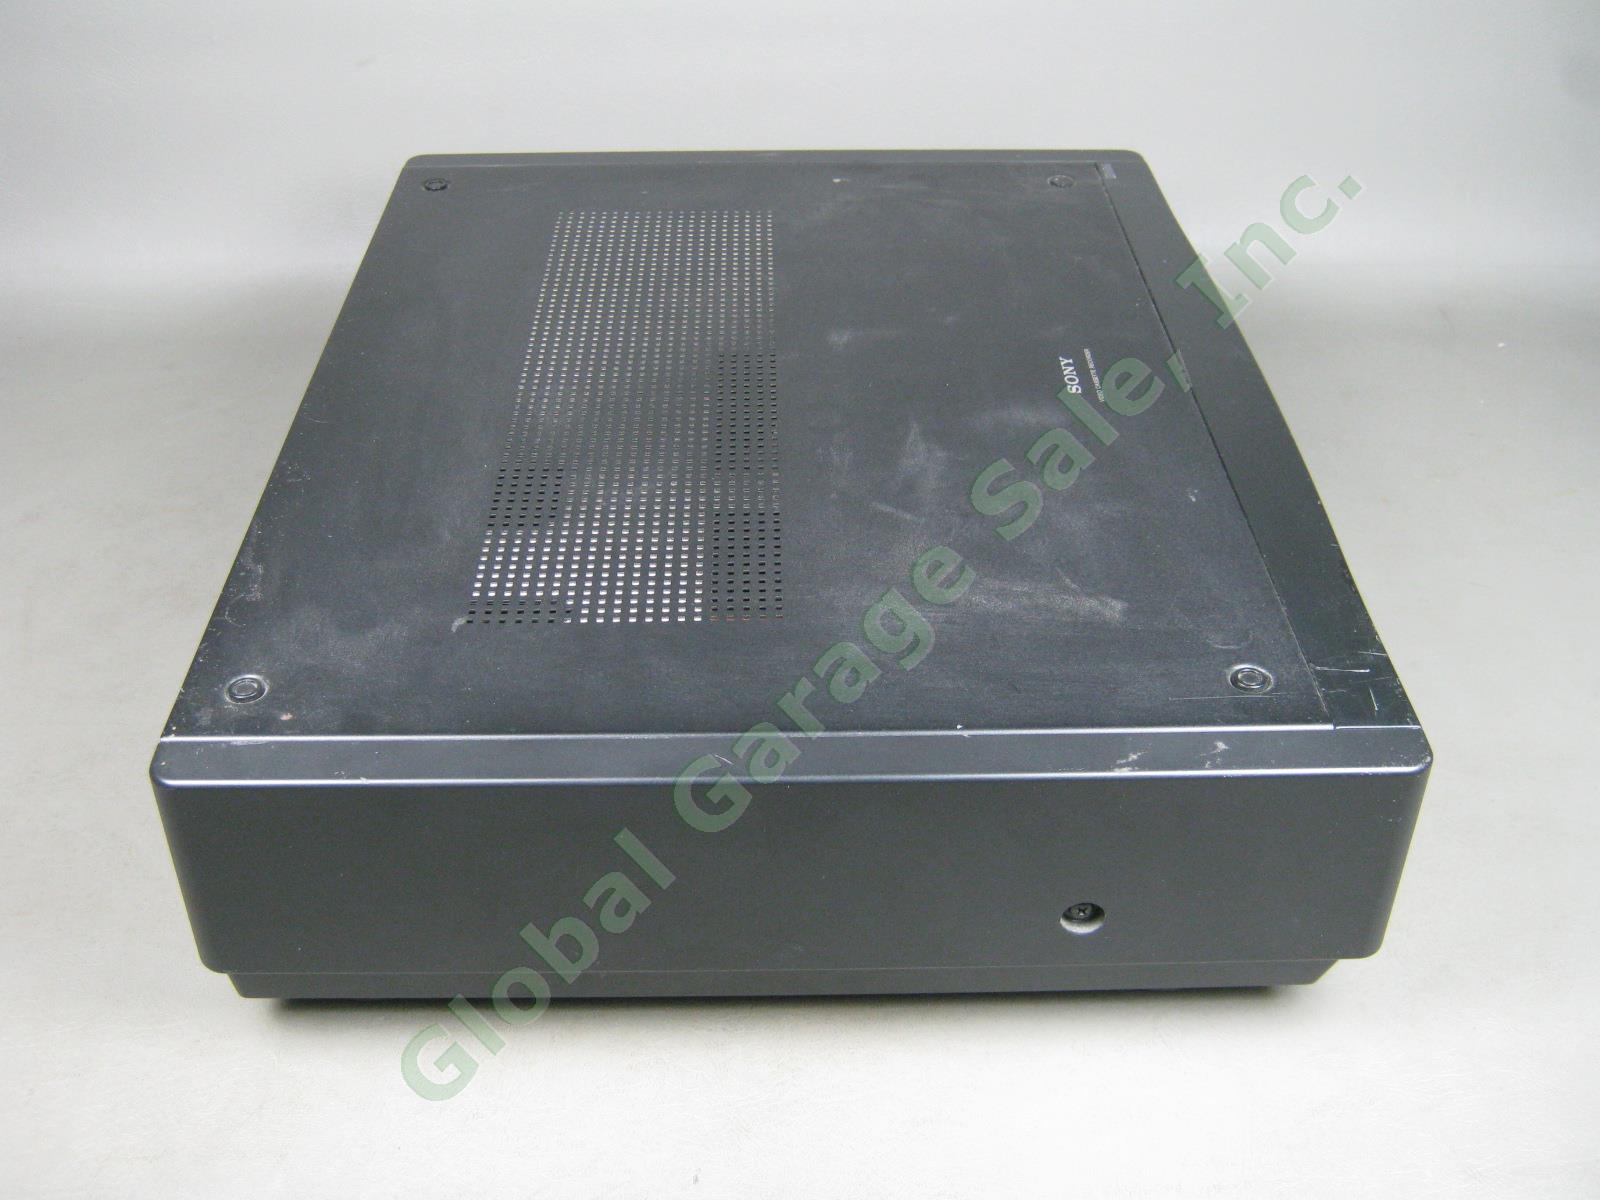 Sony EV-S7000 Hi8 8mm Digital HiFi Editing VCR Player Recorder +Remote Bundle NR 3